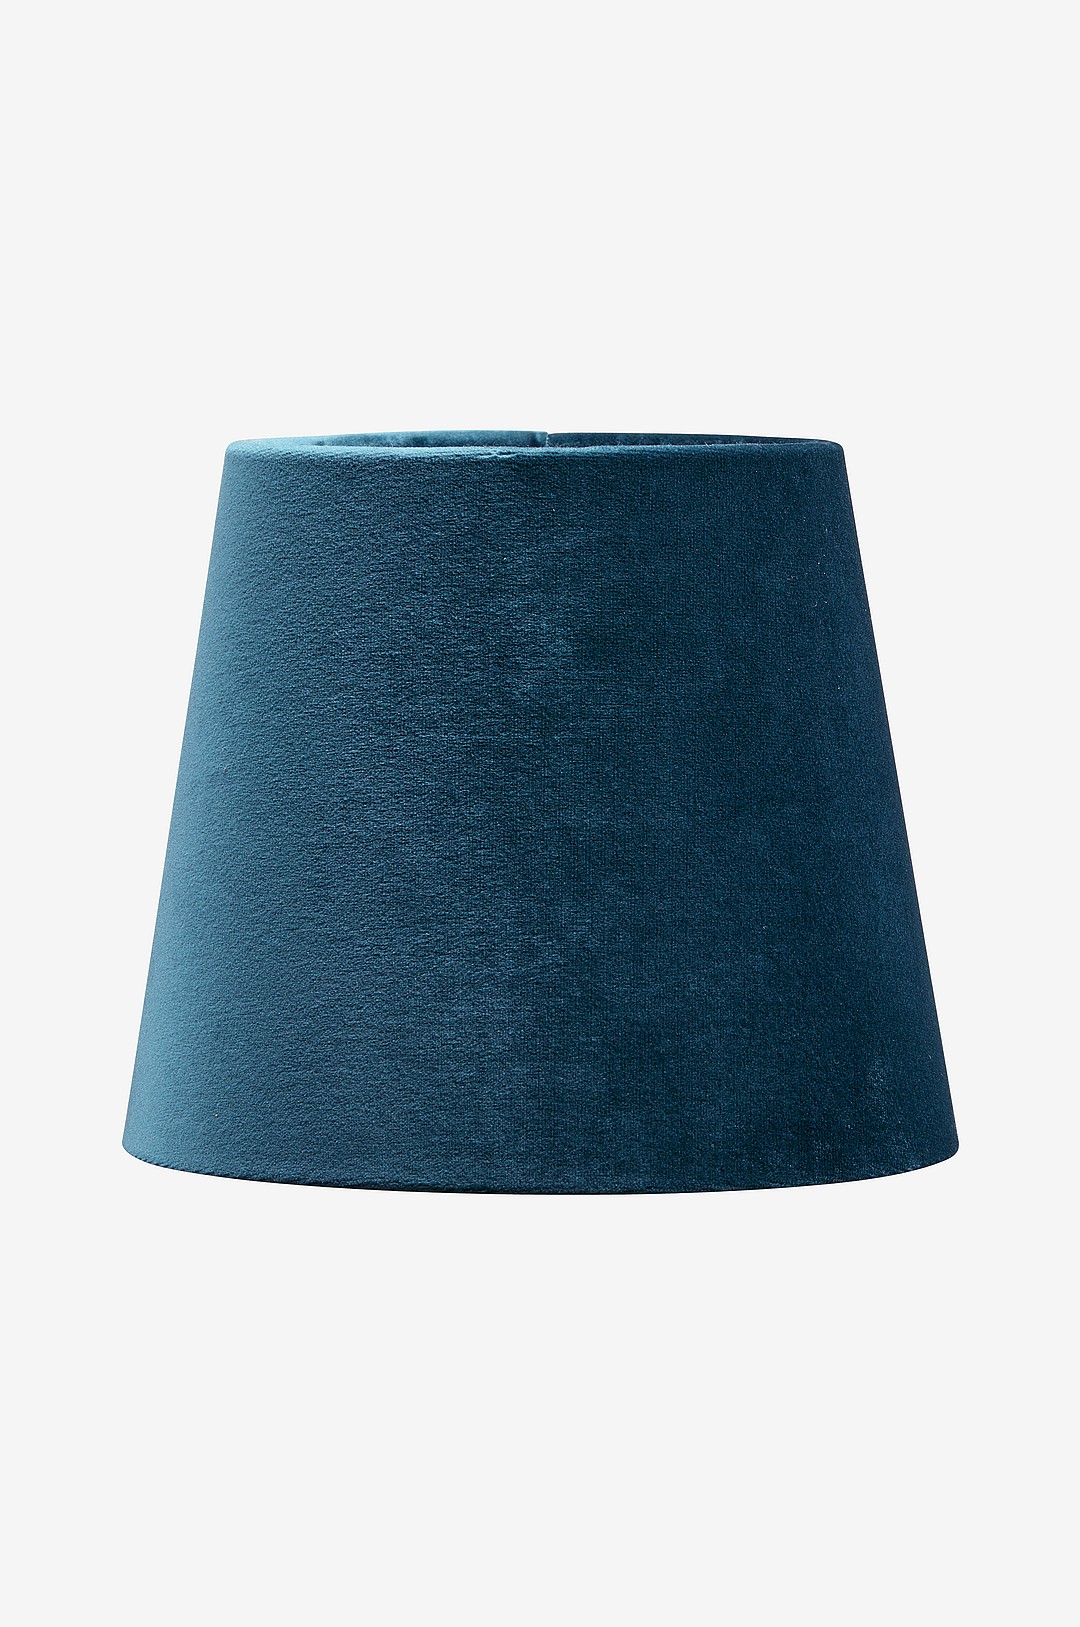 PR Home - Lampskärm Mia Sammet 17 cm - Blå